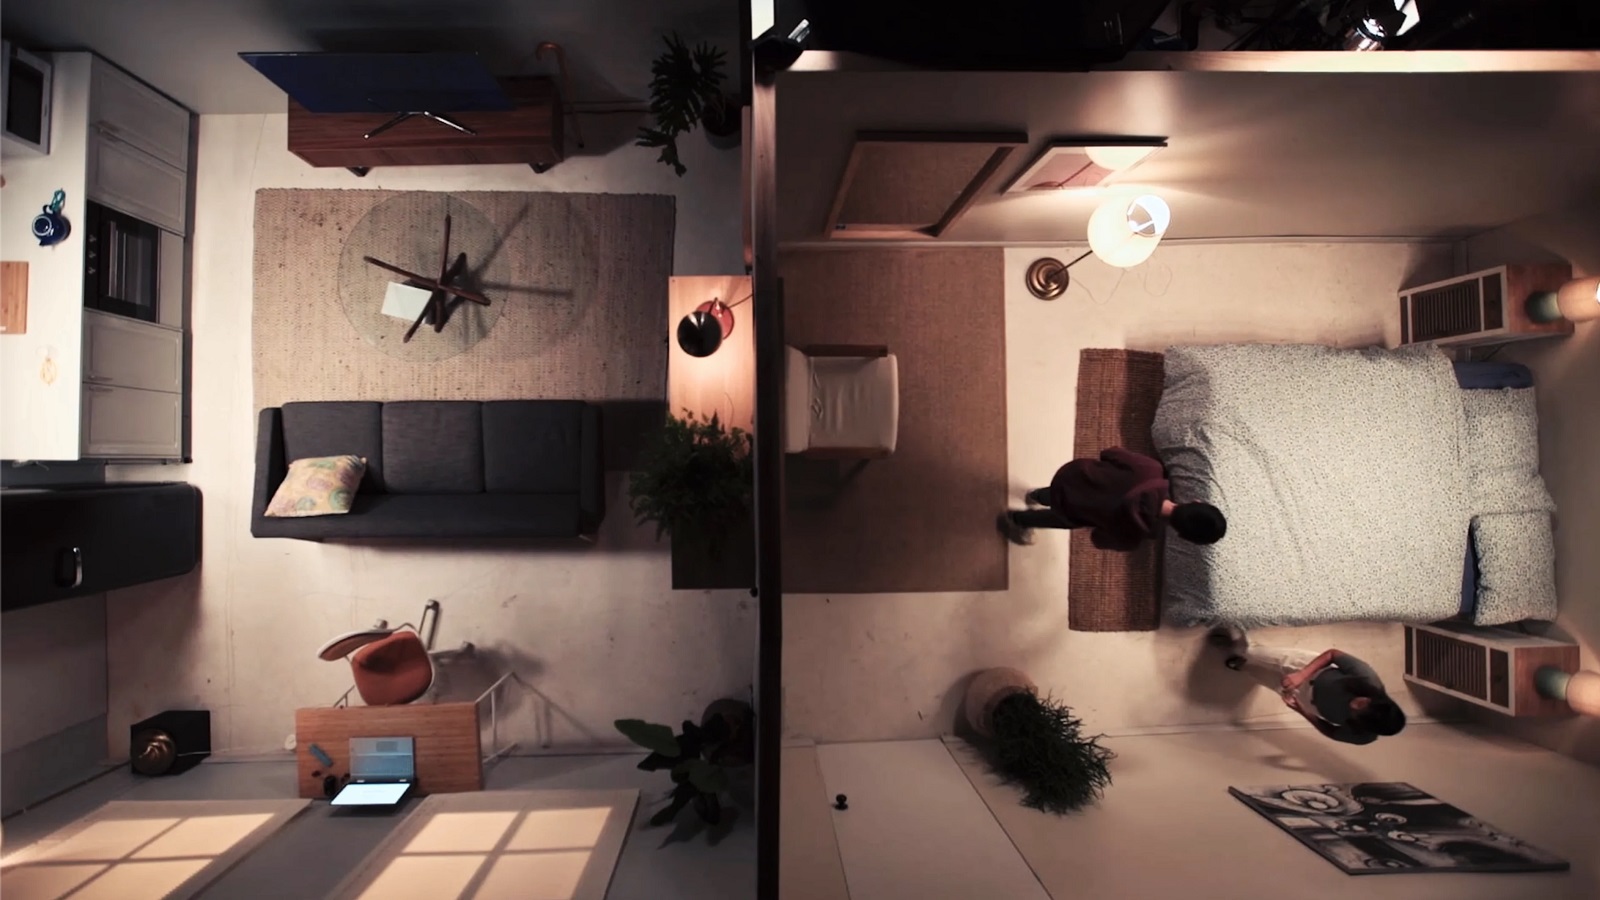 Weird Escape Room Simulates Life with Parkinson’s